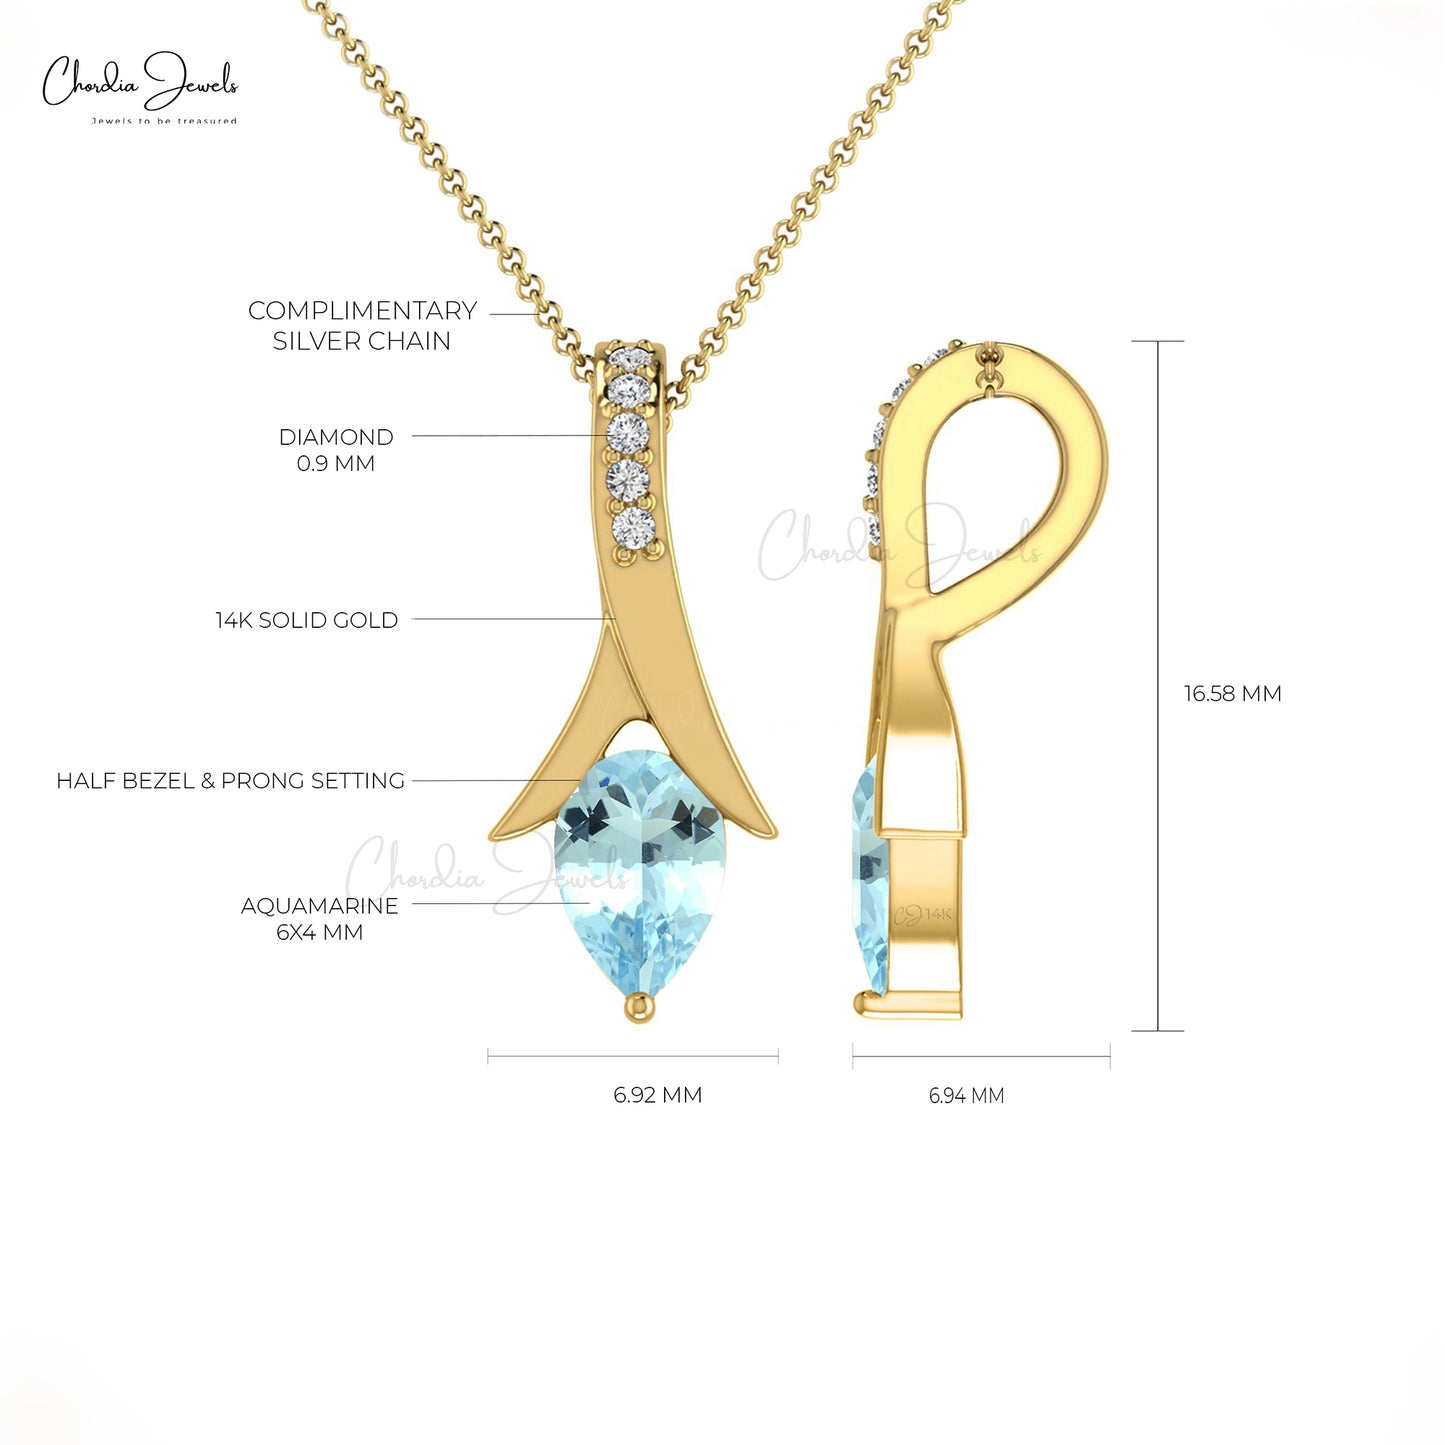 Natural Aquamarine Tear Drop Pendant 14k Solid Gold White Diamond Pendant 0.35 Cts Pear Cut Handmade Gemstone Jewelry For Birthday Gift